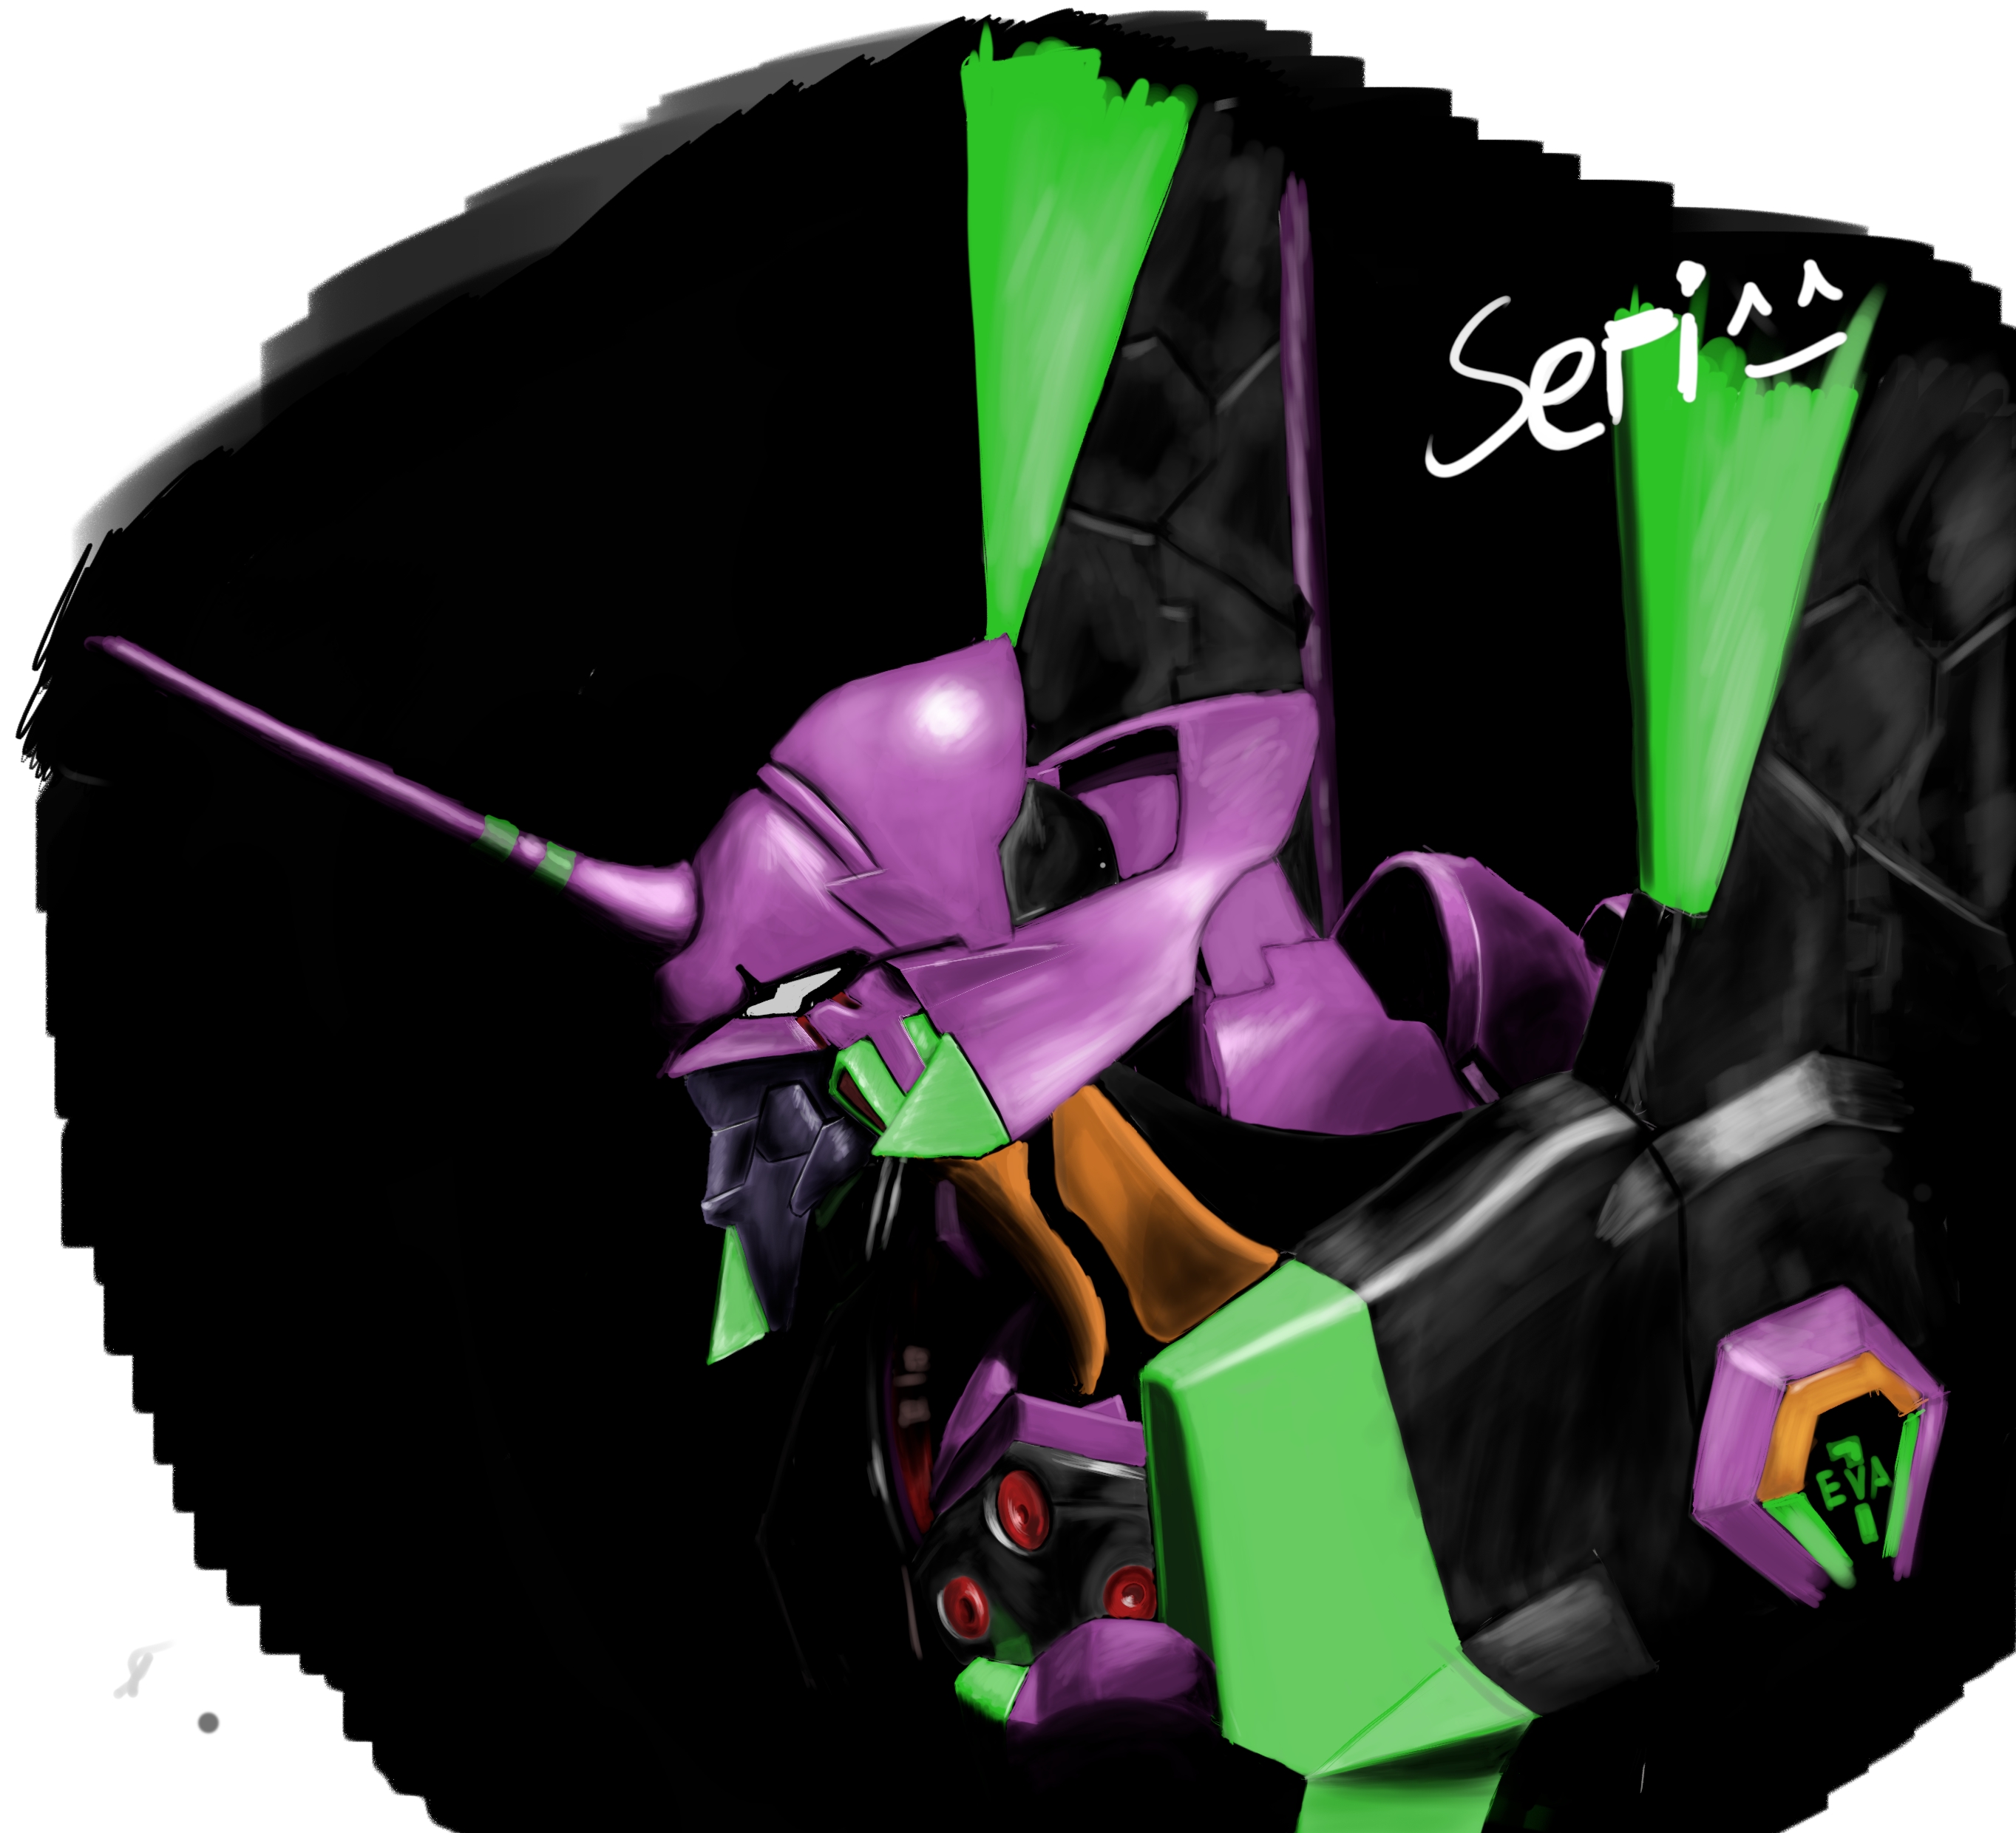 EVA Unit 01 Neon Genesis Evangelion Anime Mechs Super Robot Taisen Artwork Digital Art Fan Art 2727x2480